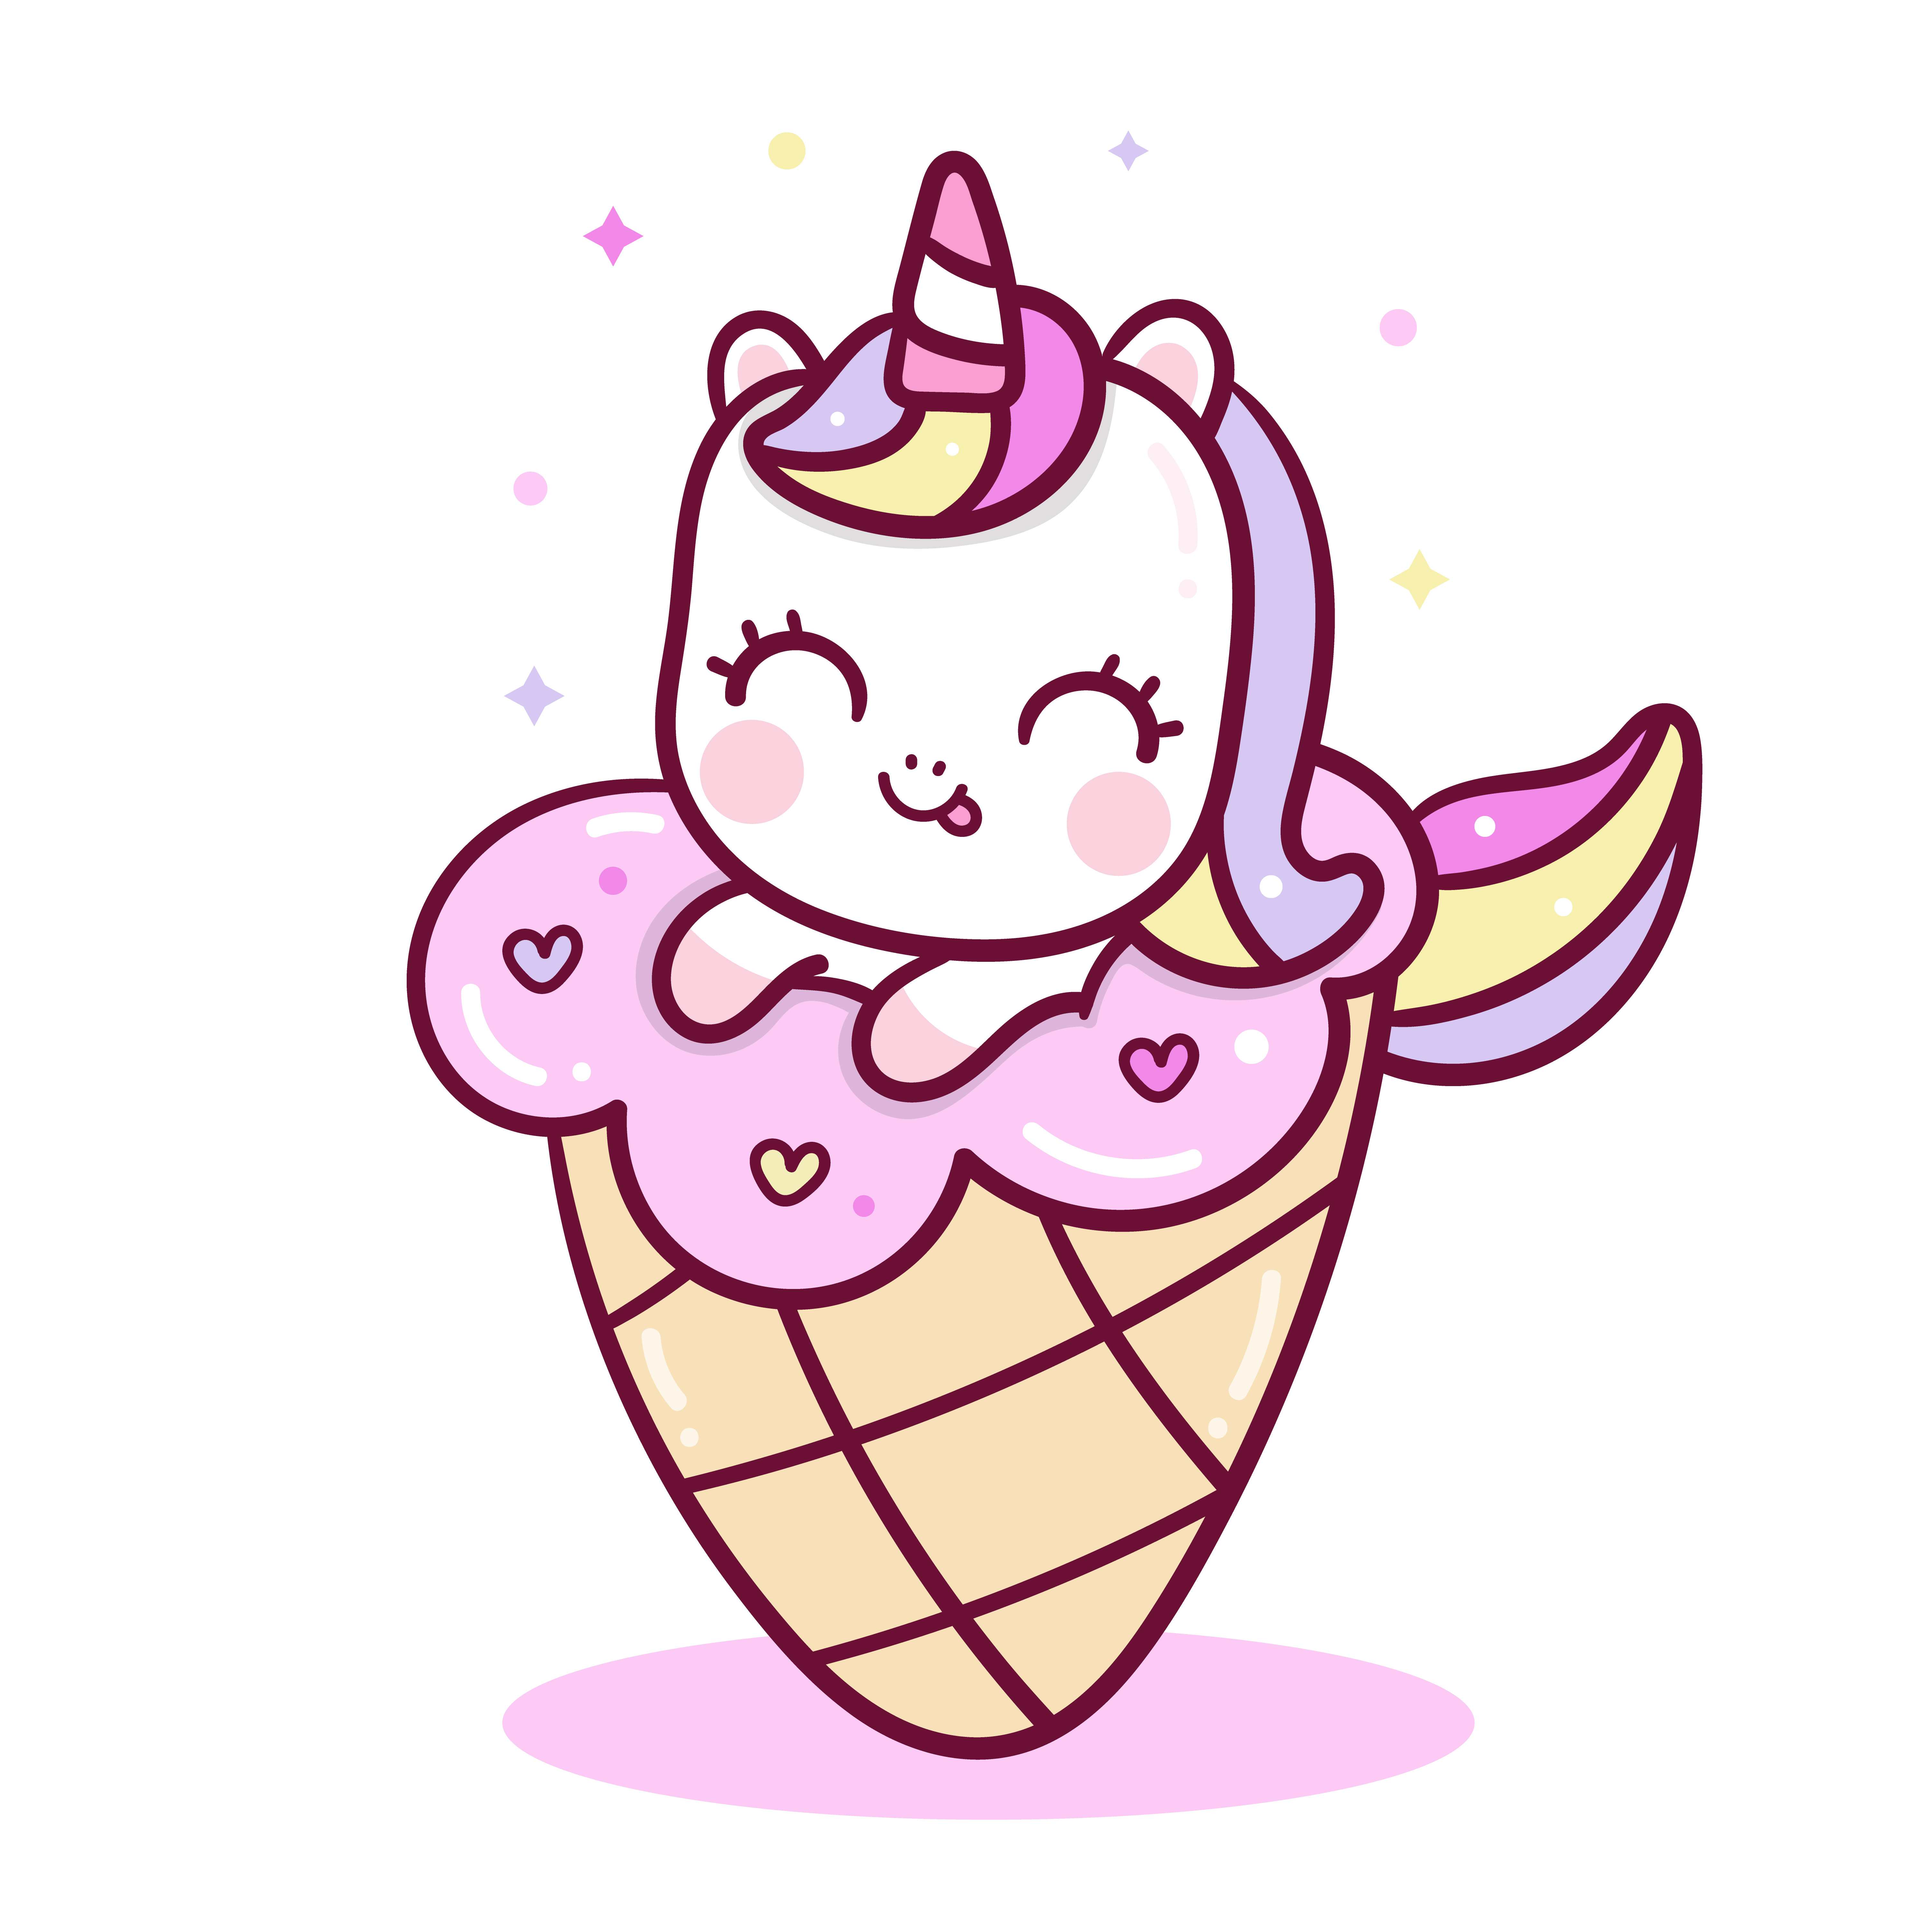 Cute unicorn vector with yummy ice cream